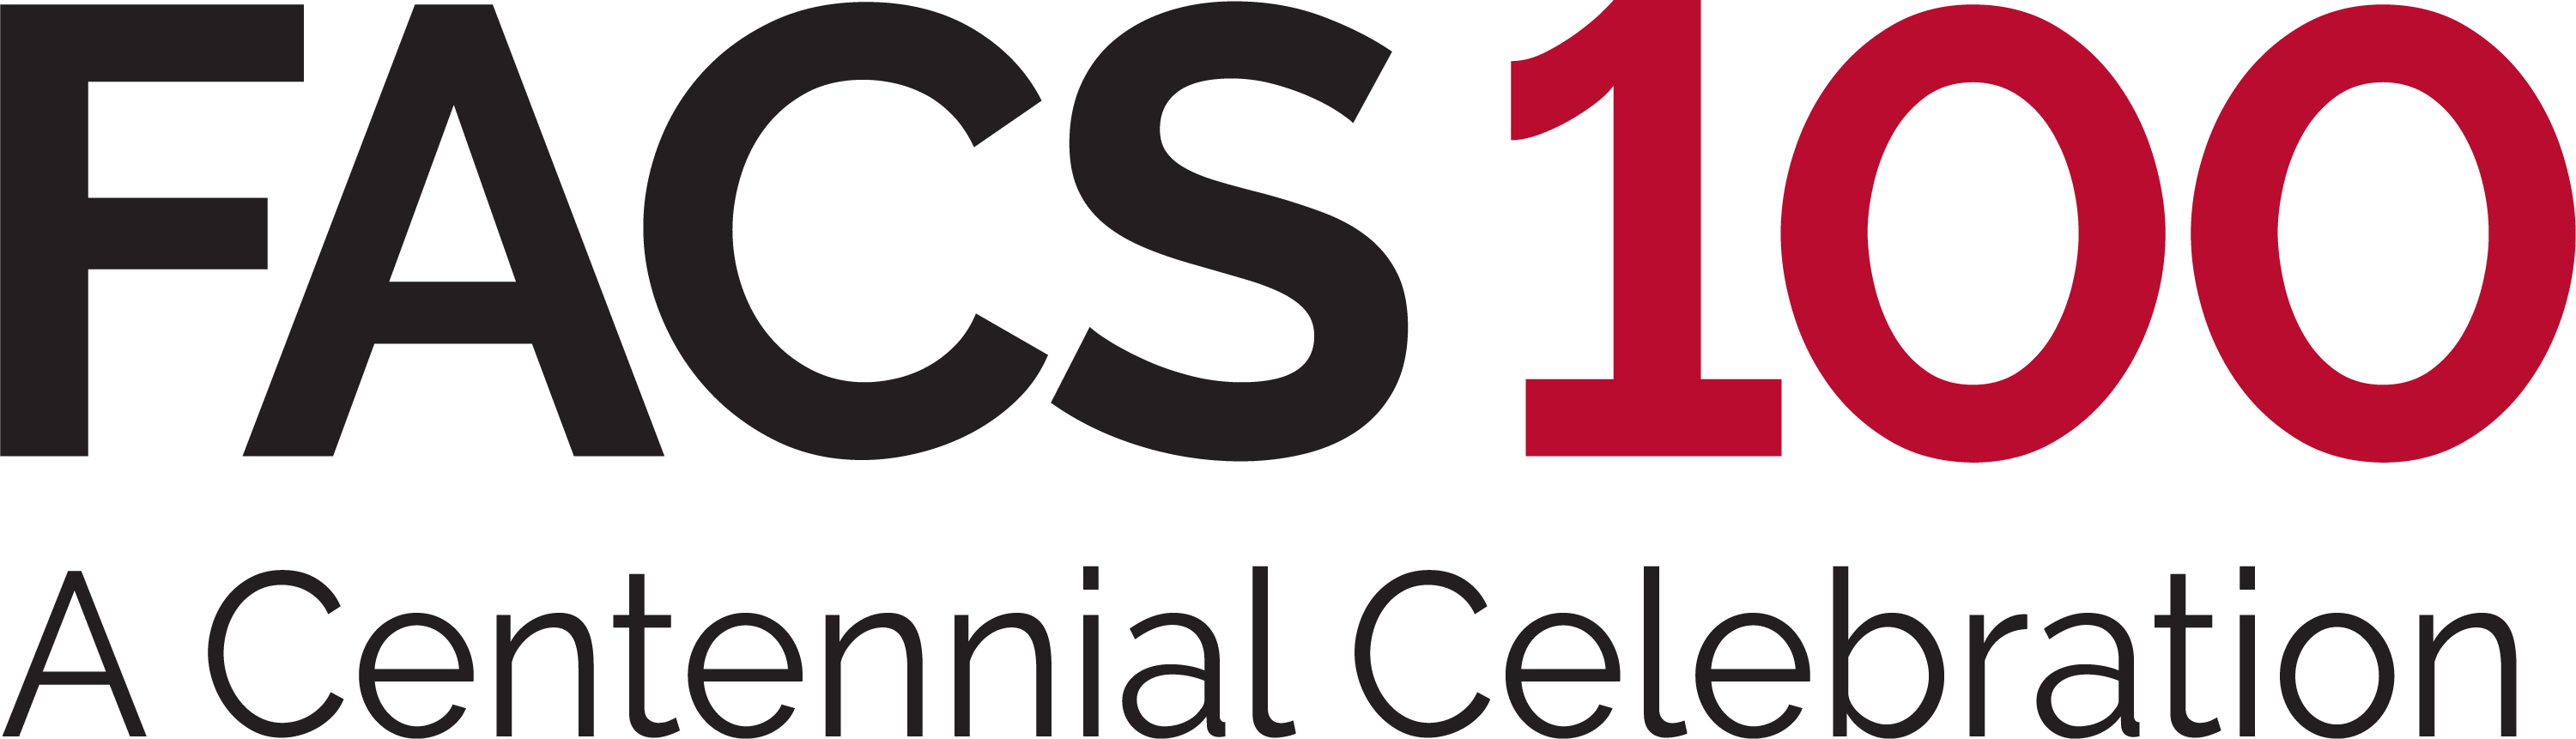 FACS Logo - FACS 100 Centennial Logo and Style Guide | College of Family and ...